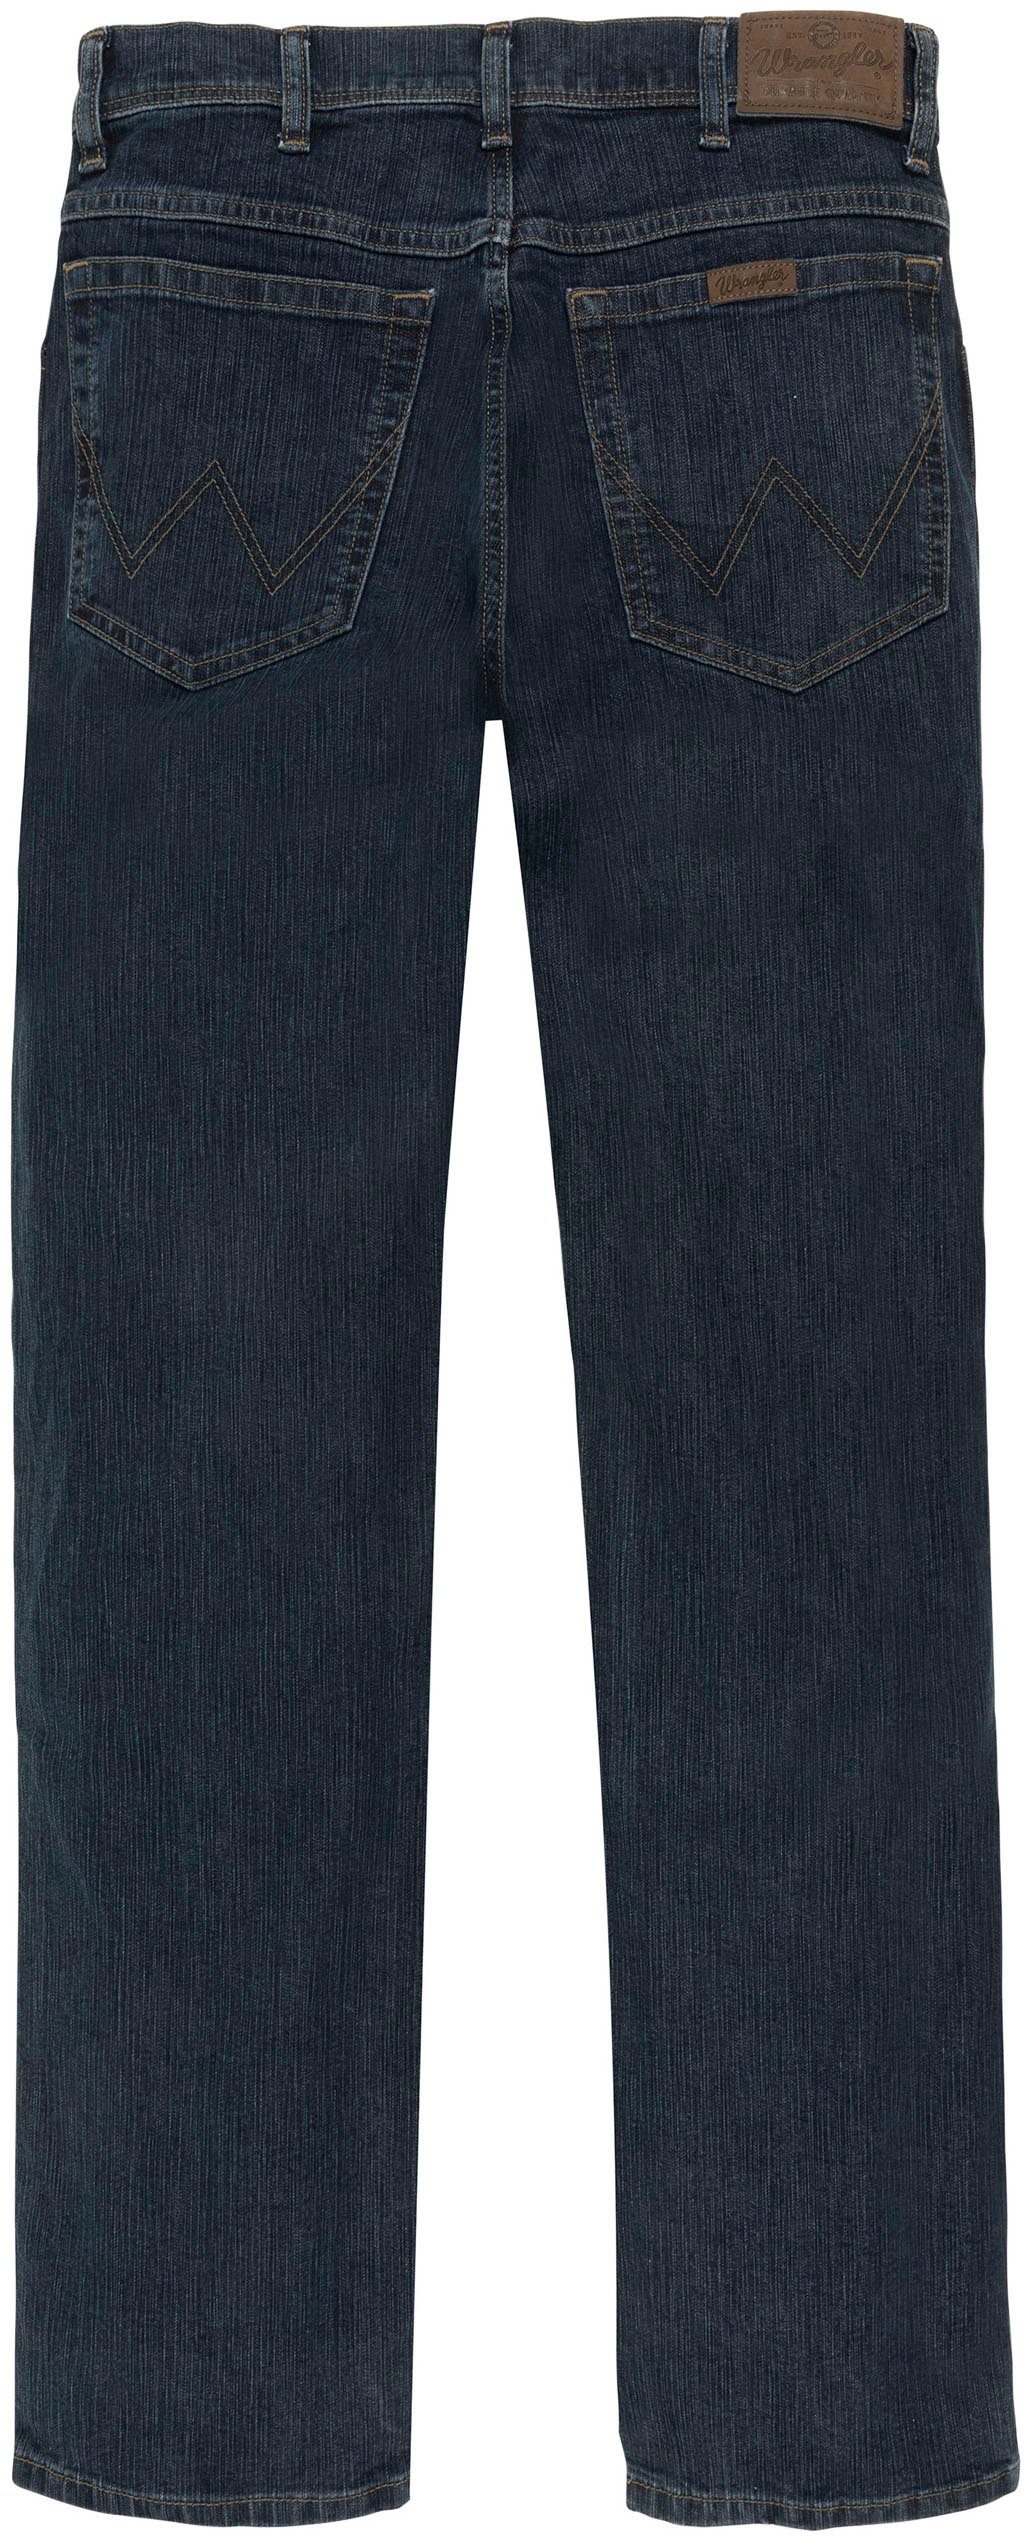 Stretch-Jeans dark-stone Wrangler